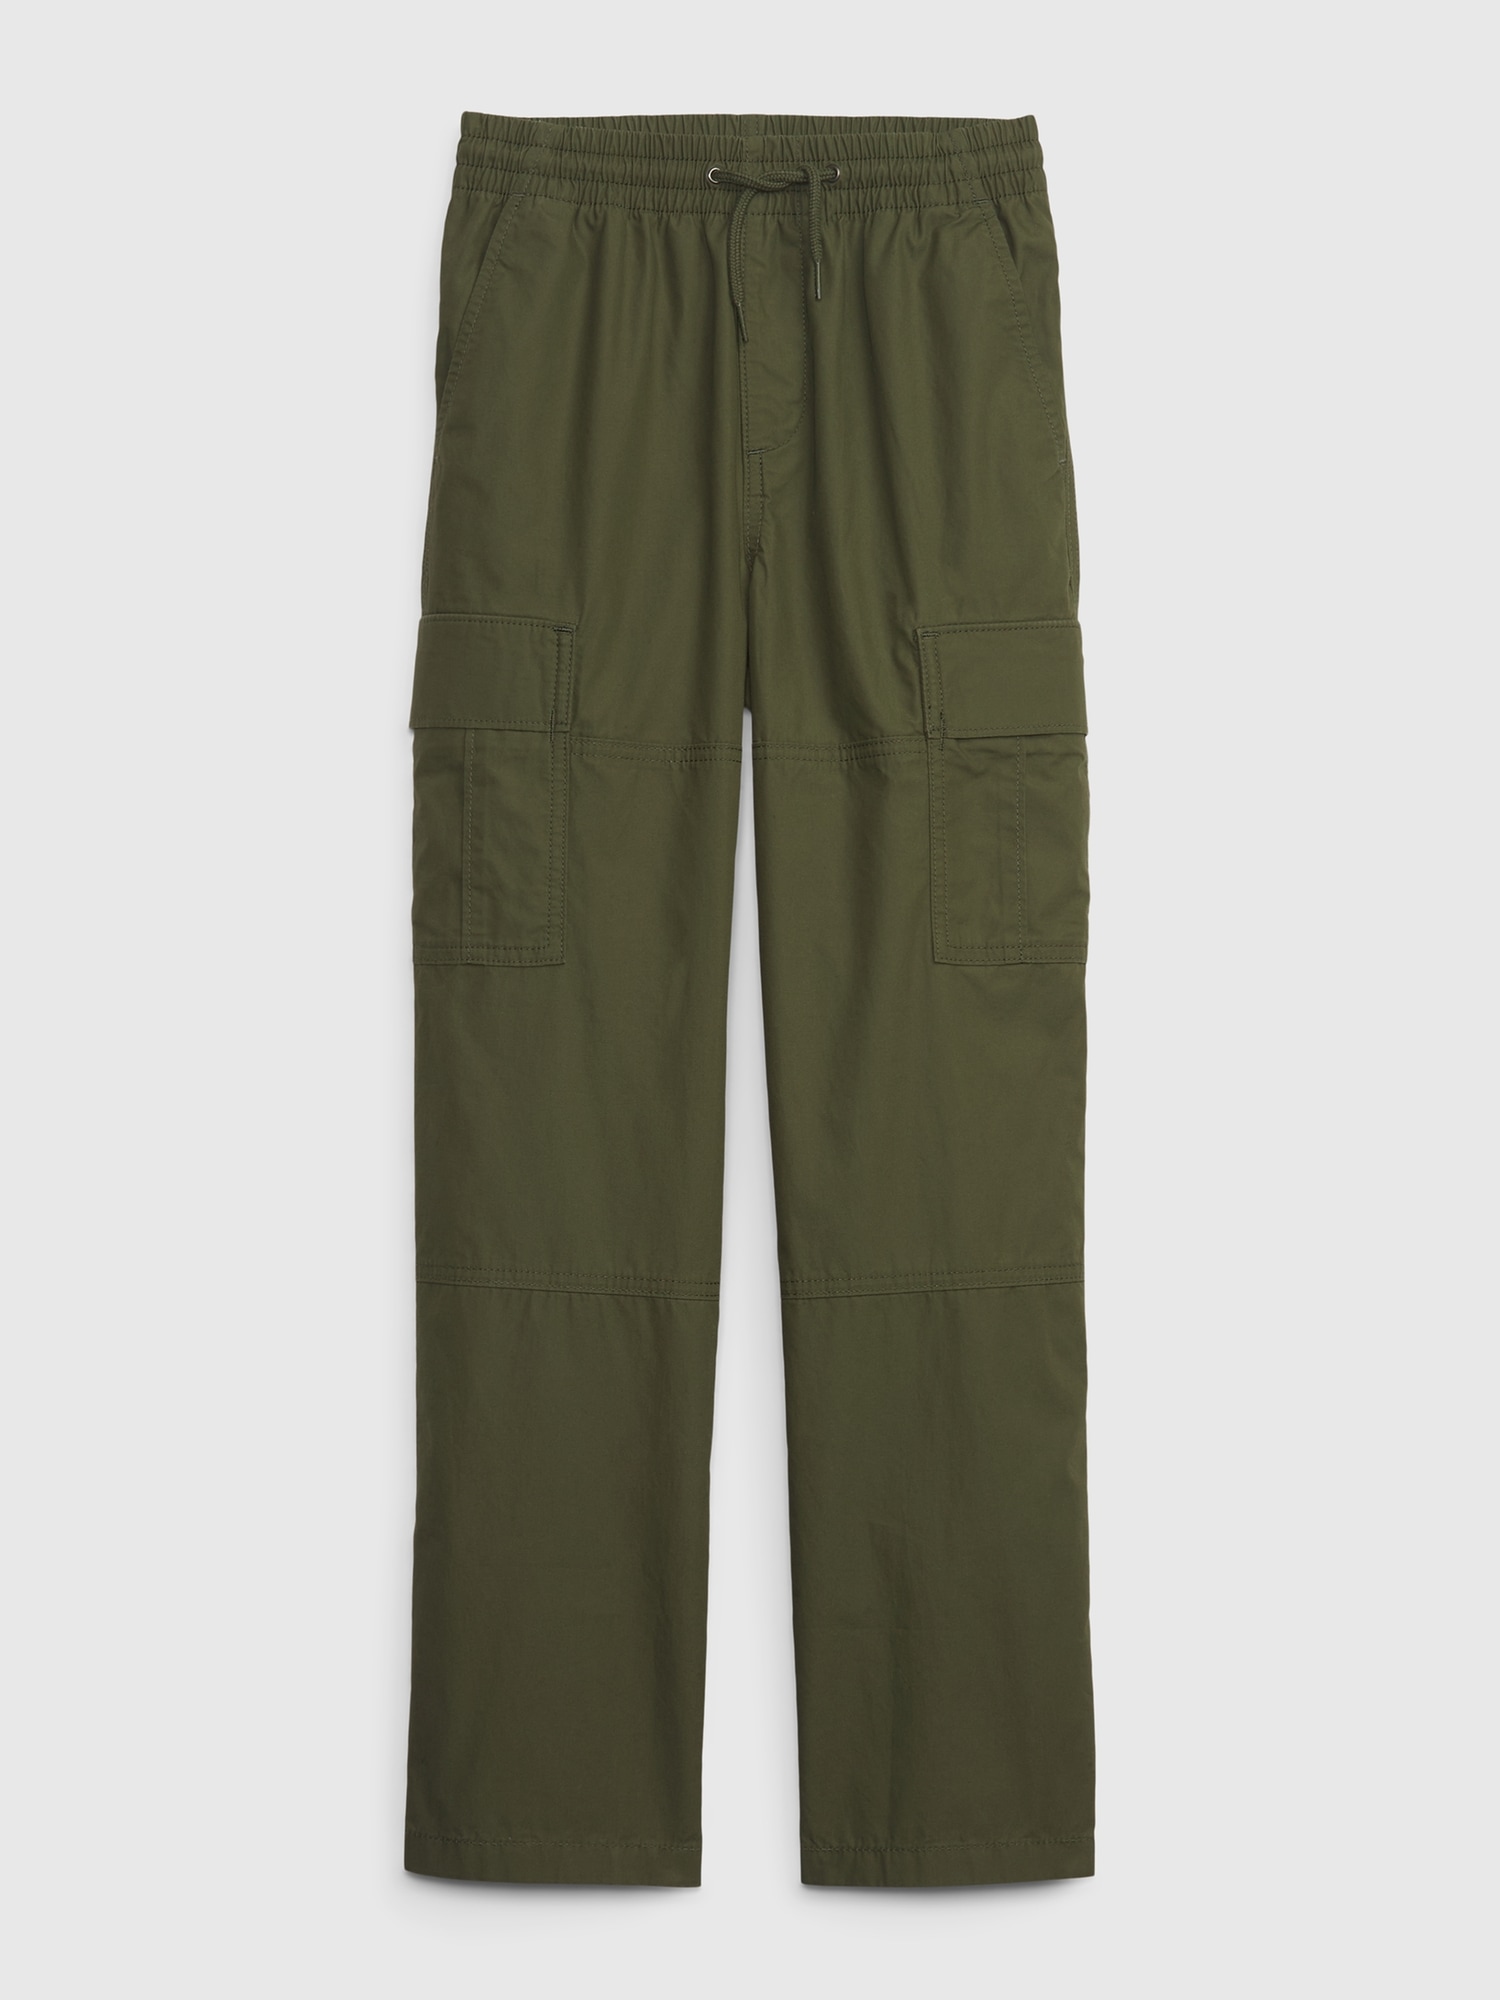 NEW Gap Kids Boys SZ XL Fabric Lined Camouflage Camo Cargo Pants  eBay